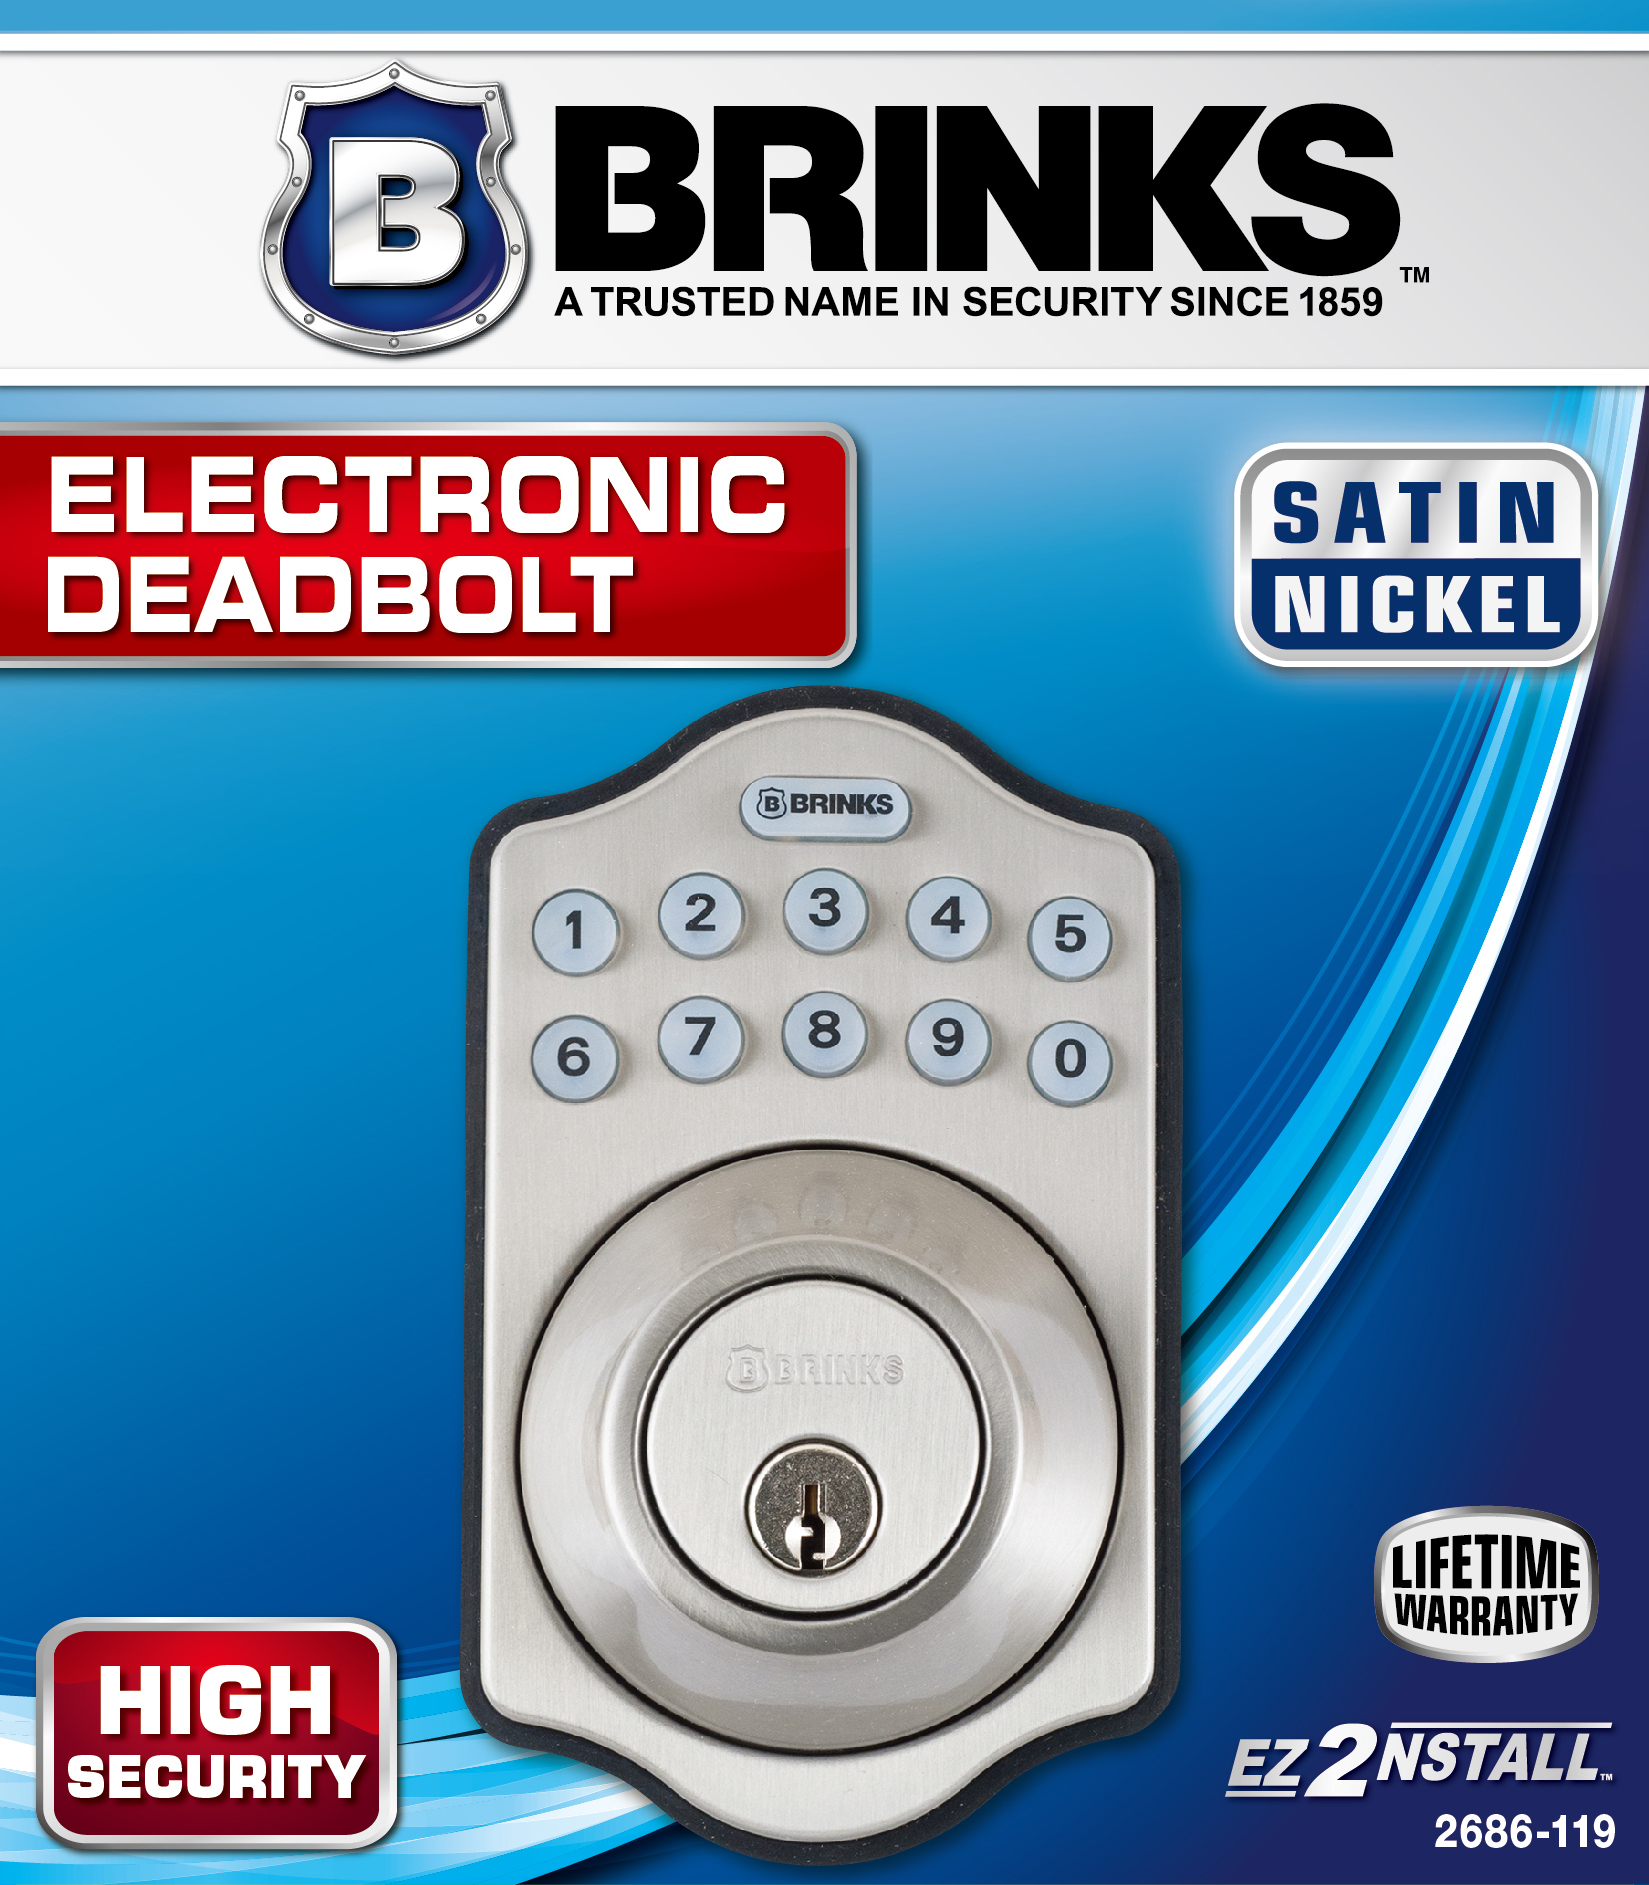 Brinks, Keyed Entry, Electronic Deadbolt, Satin Nickel Finish - image 4 of 5